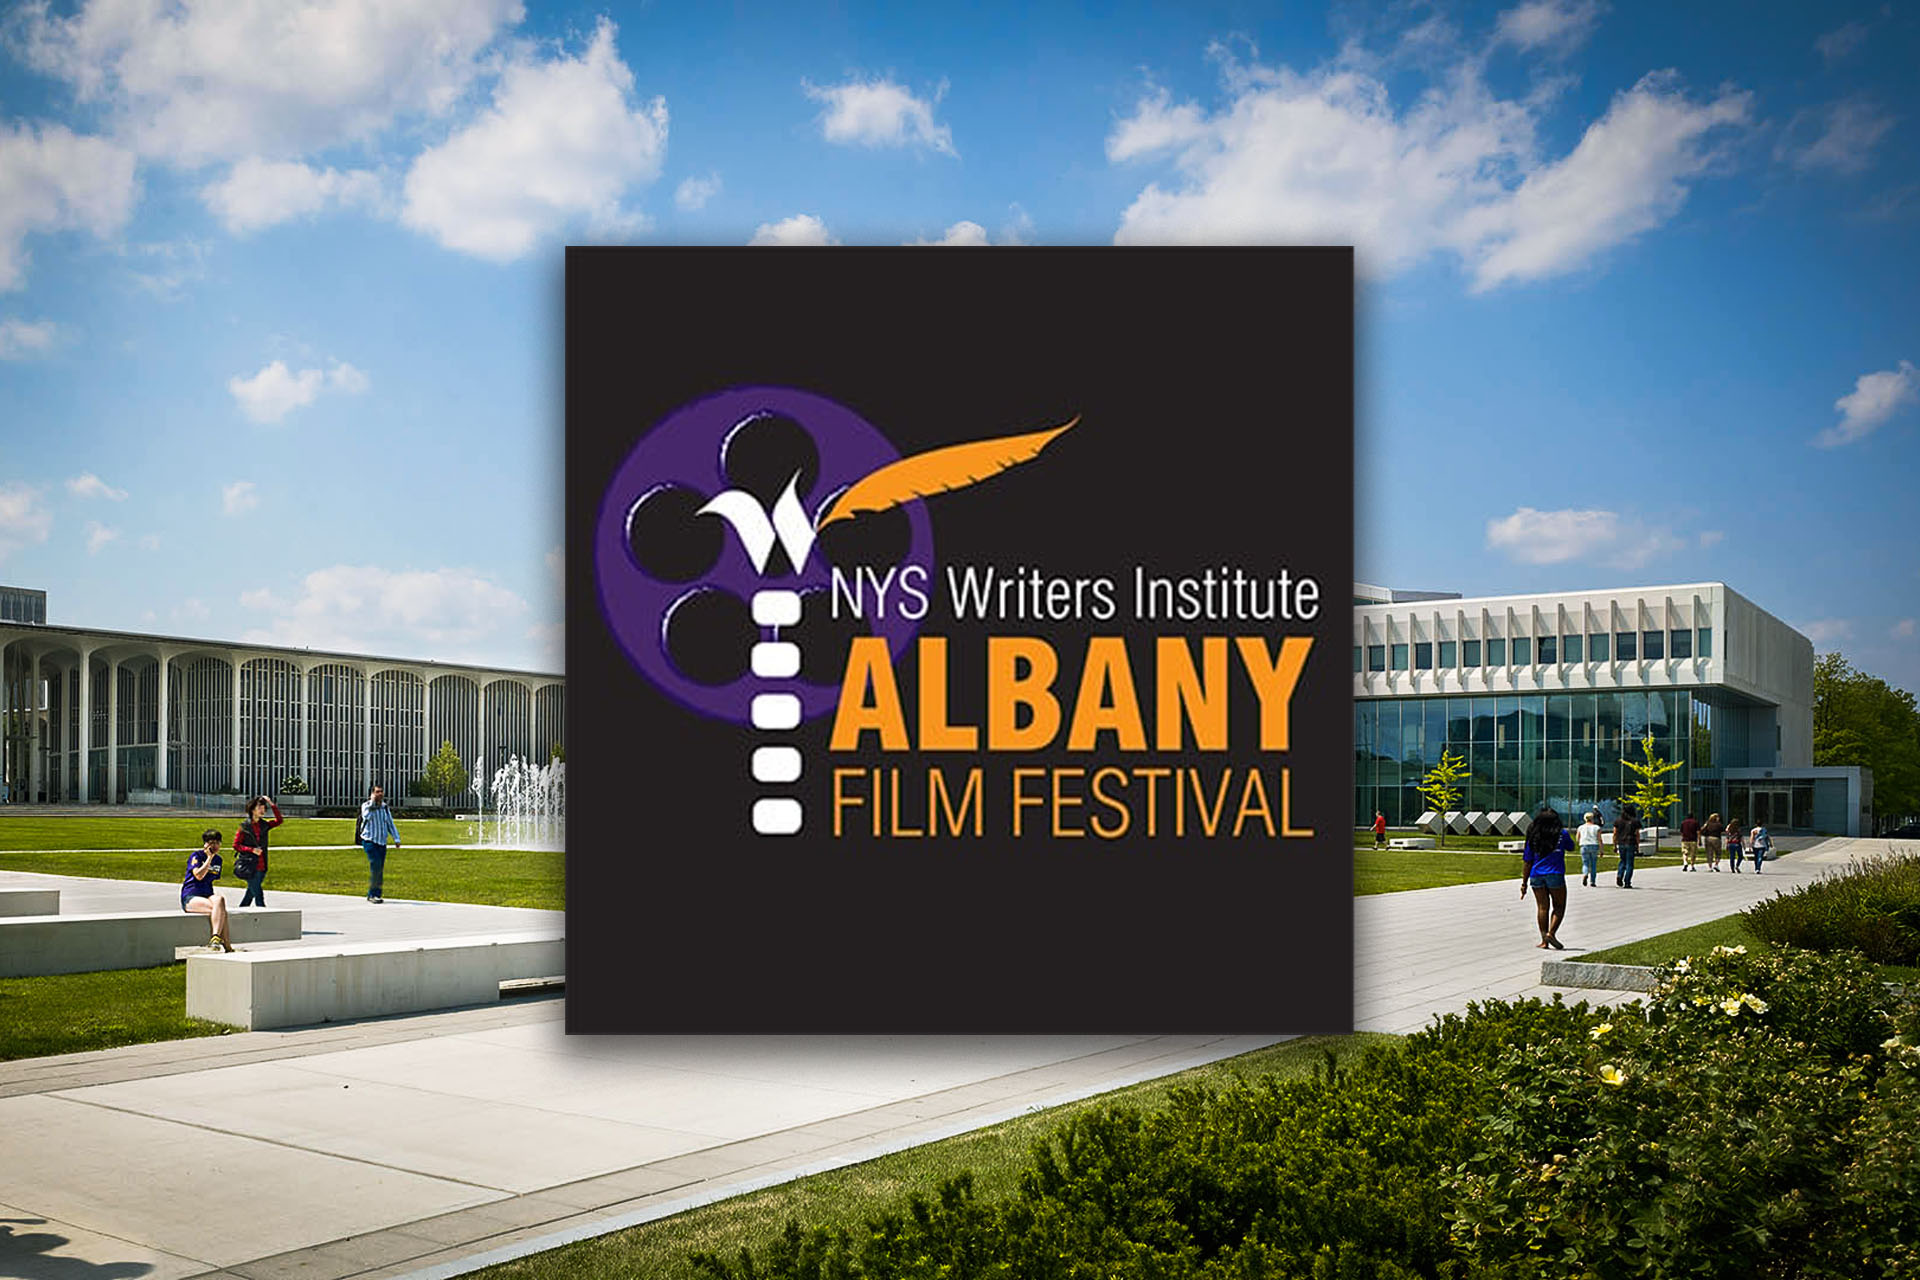 Albany Film Festival